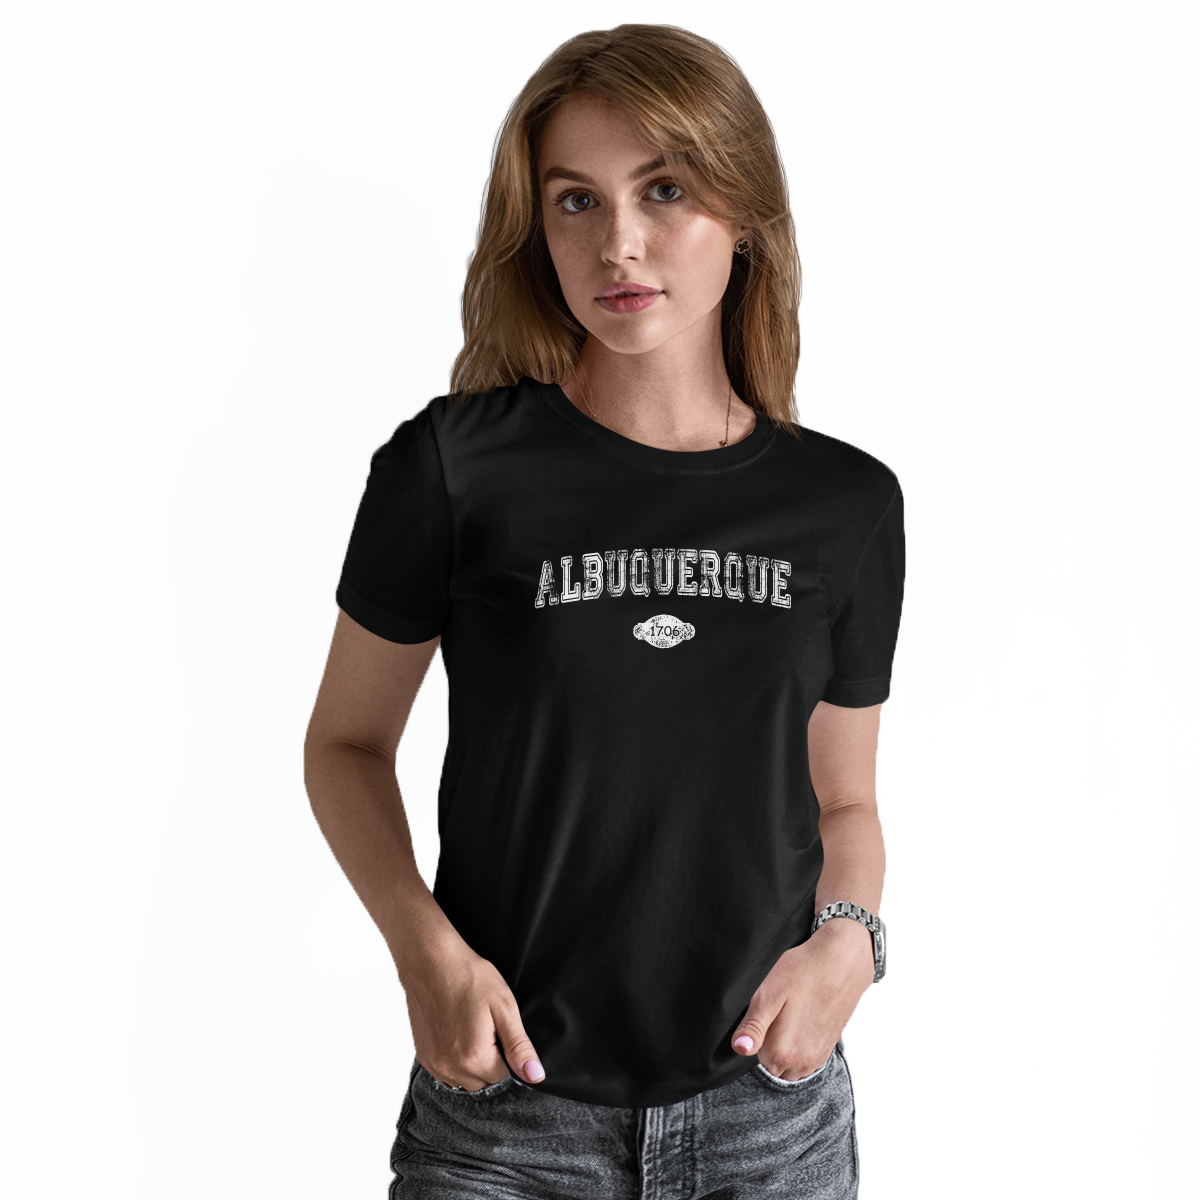 Albuquerque 1706 Represent Women's T-shirt | Black